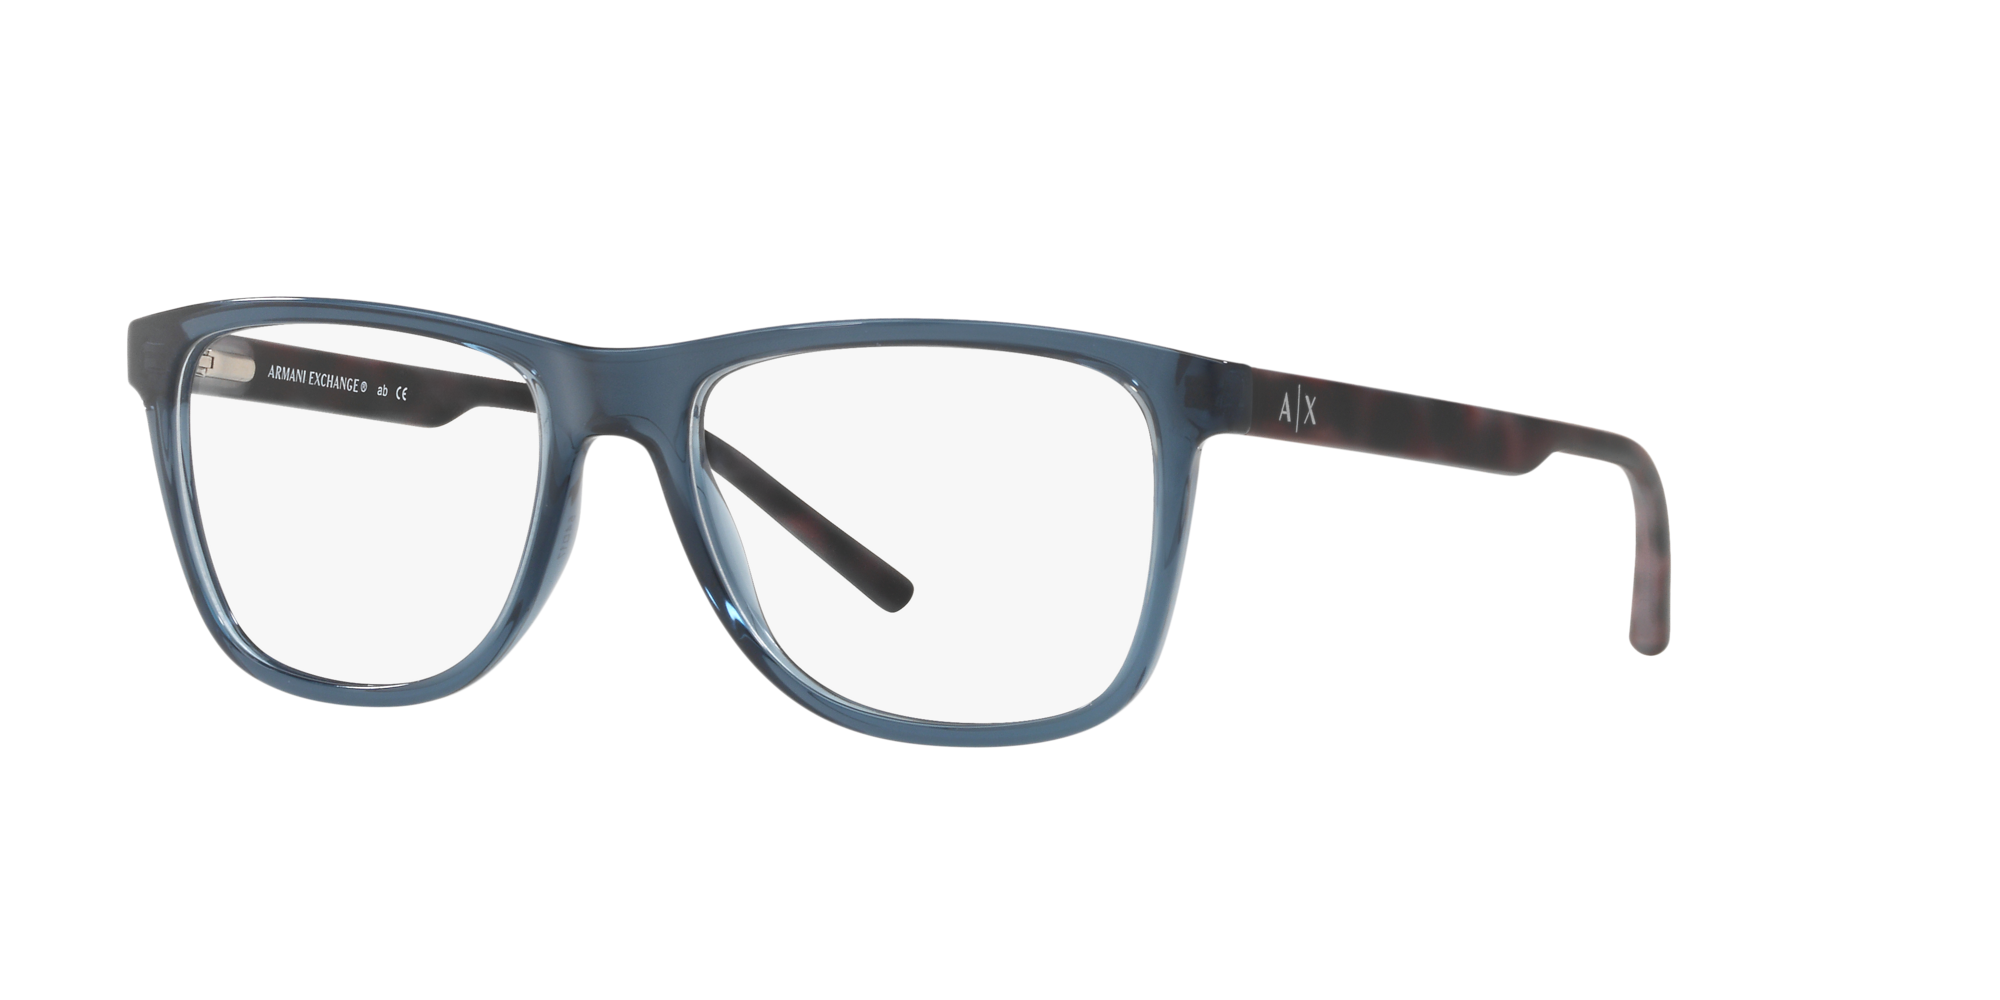 Angle_Left01 Armani Exchange AX 3048 Glasses Transparent / White